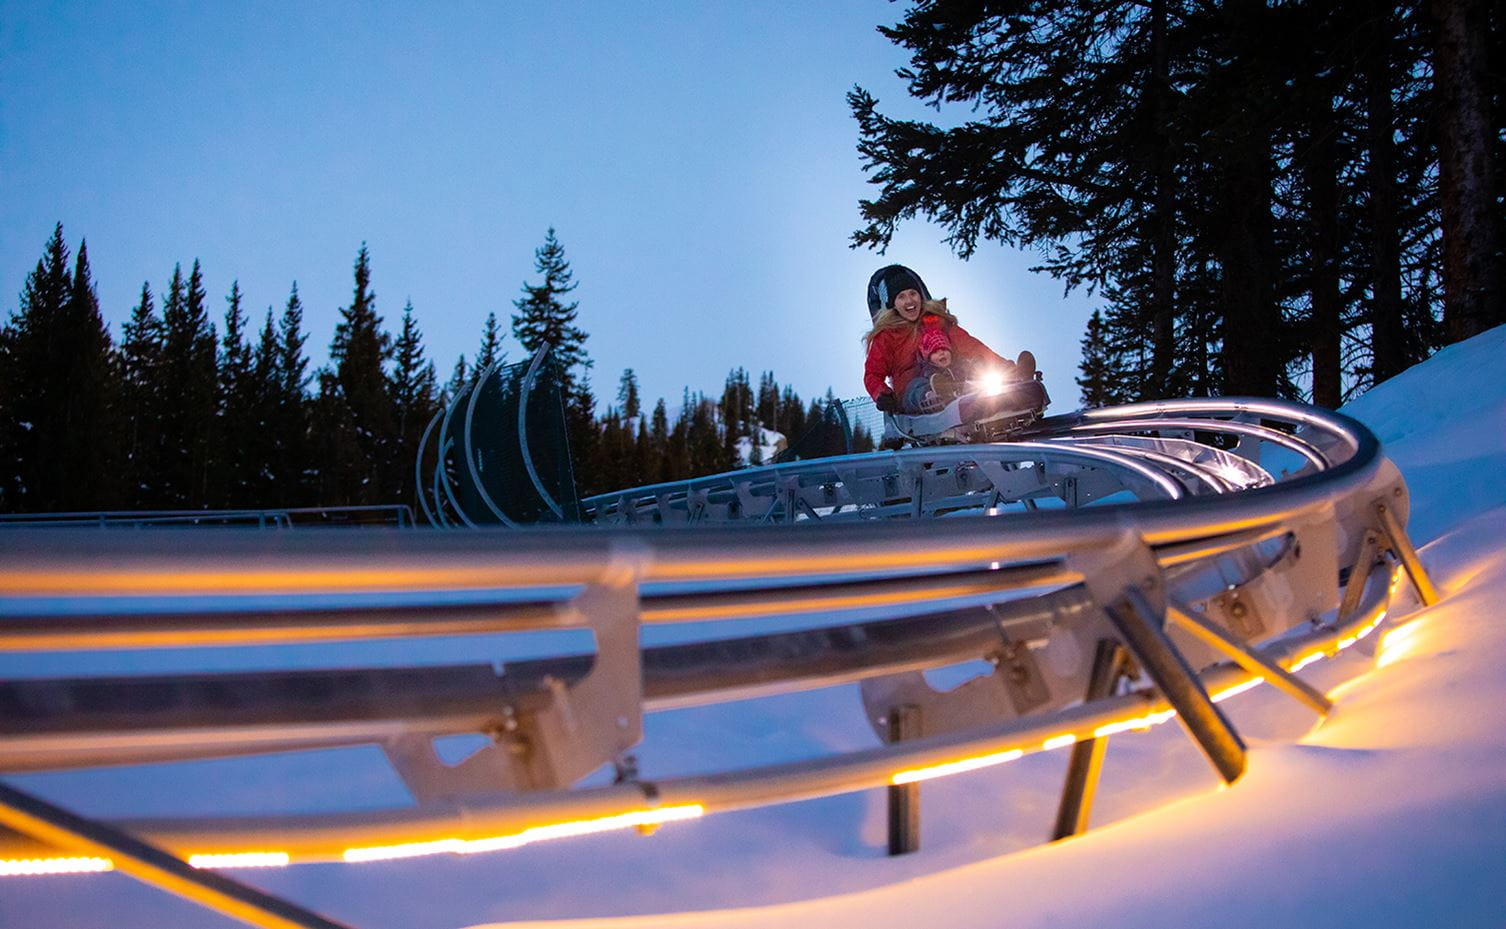 Riders enjoy the Breathtaker Alpine Coaster at night